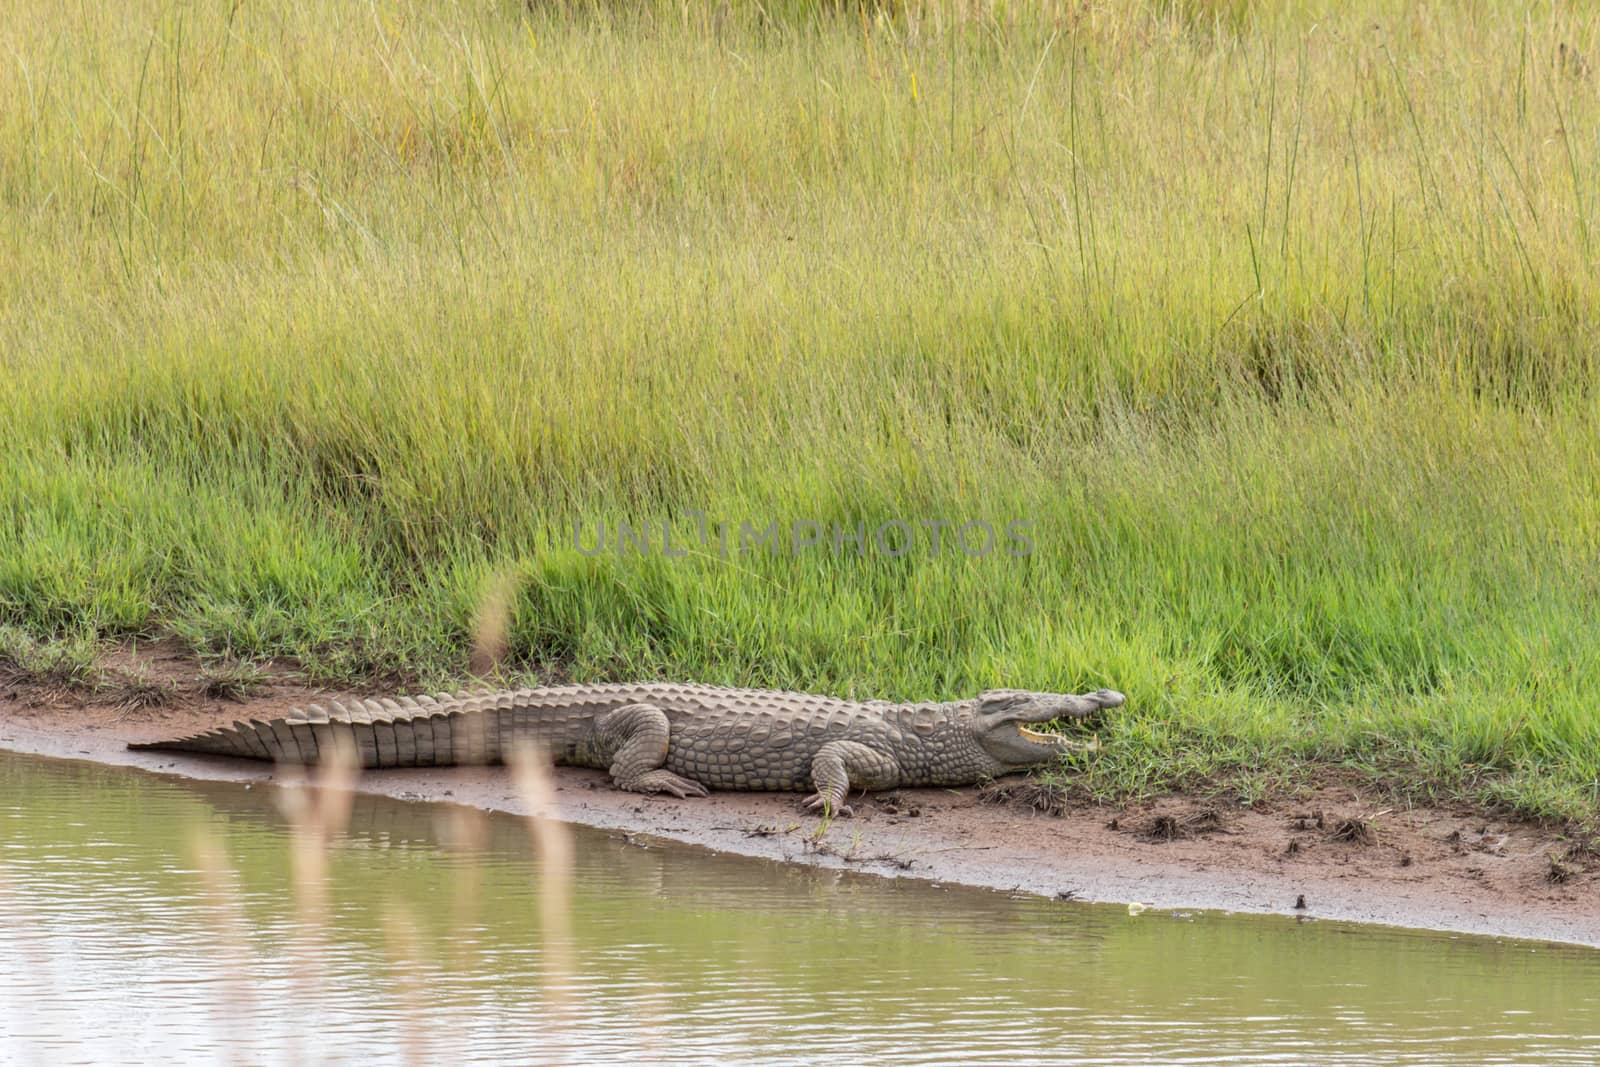 Nile crocodile: Crocodylus niloticus by RiaanAlbrecht